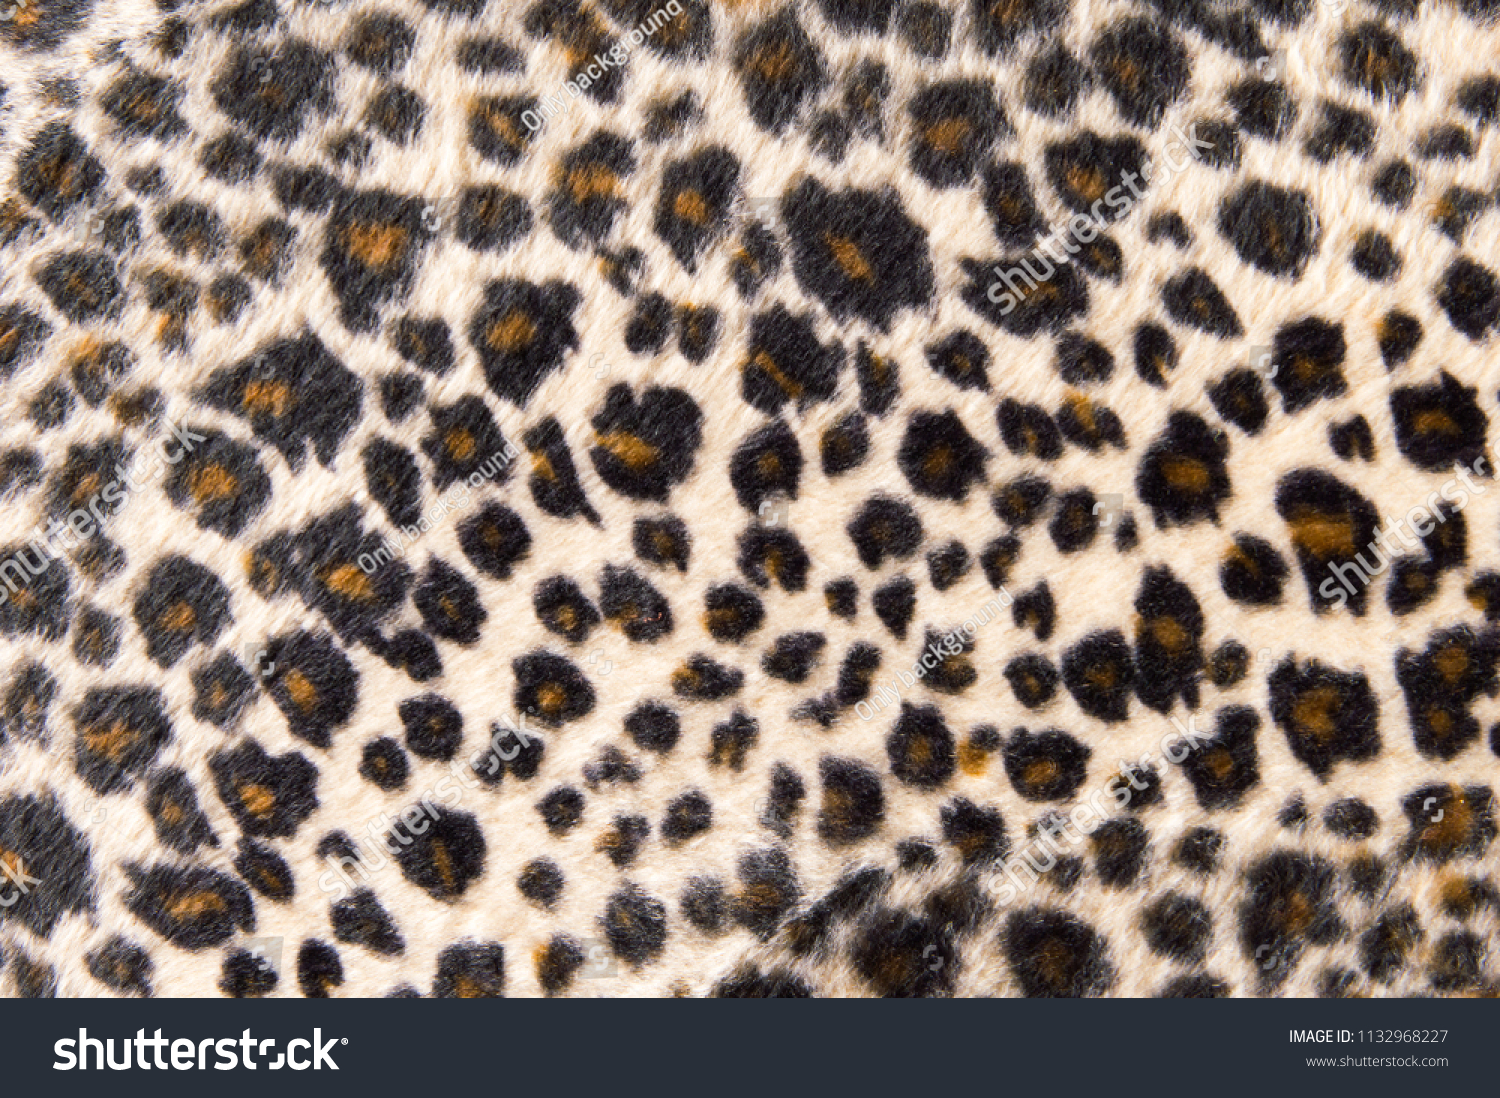 Leopard fur texture background. #1132968227